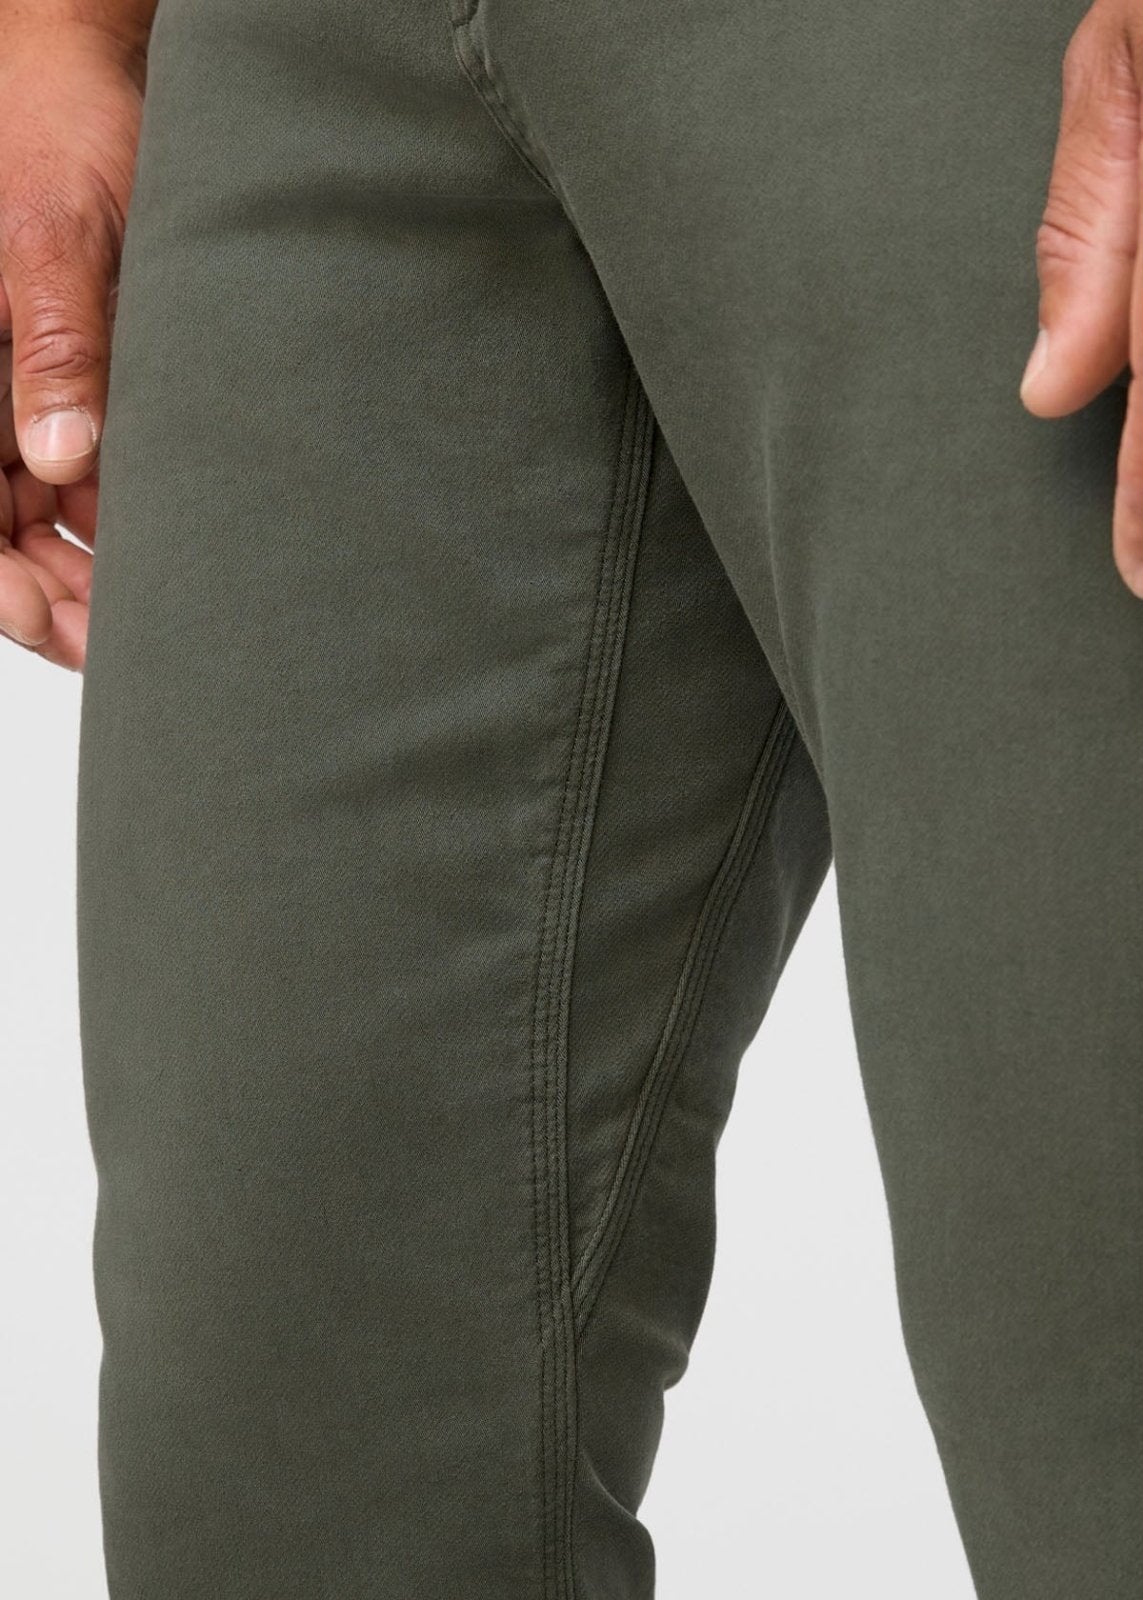 Women's Stretch Woven High-Rise Wide Leg Pants - All in Motion Moss Green  XL